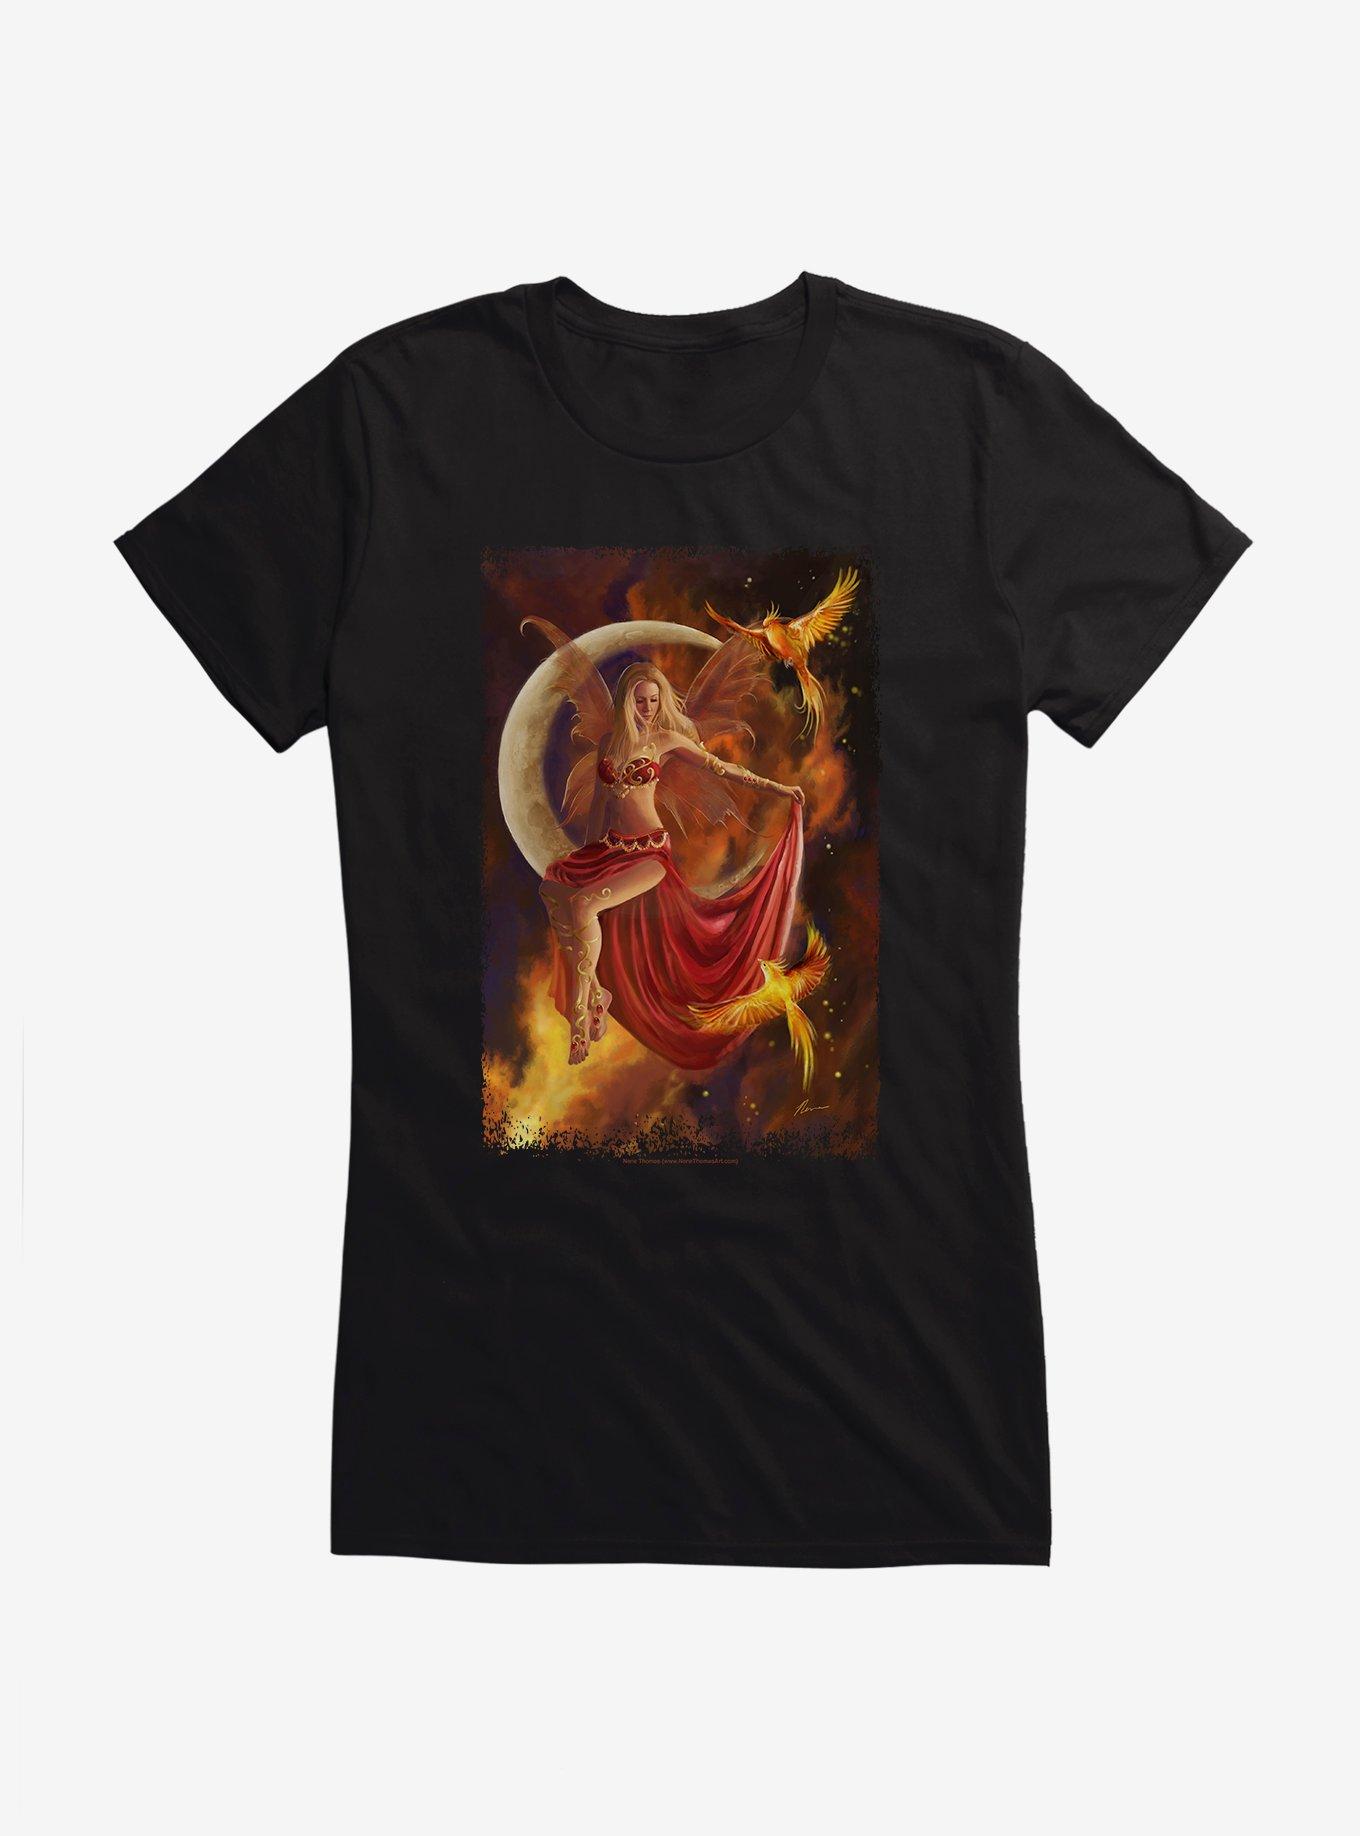 Fire Moon Girls T-Shirt by Nene Thomas